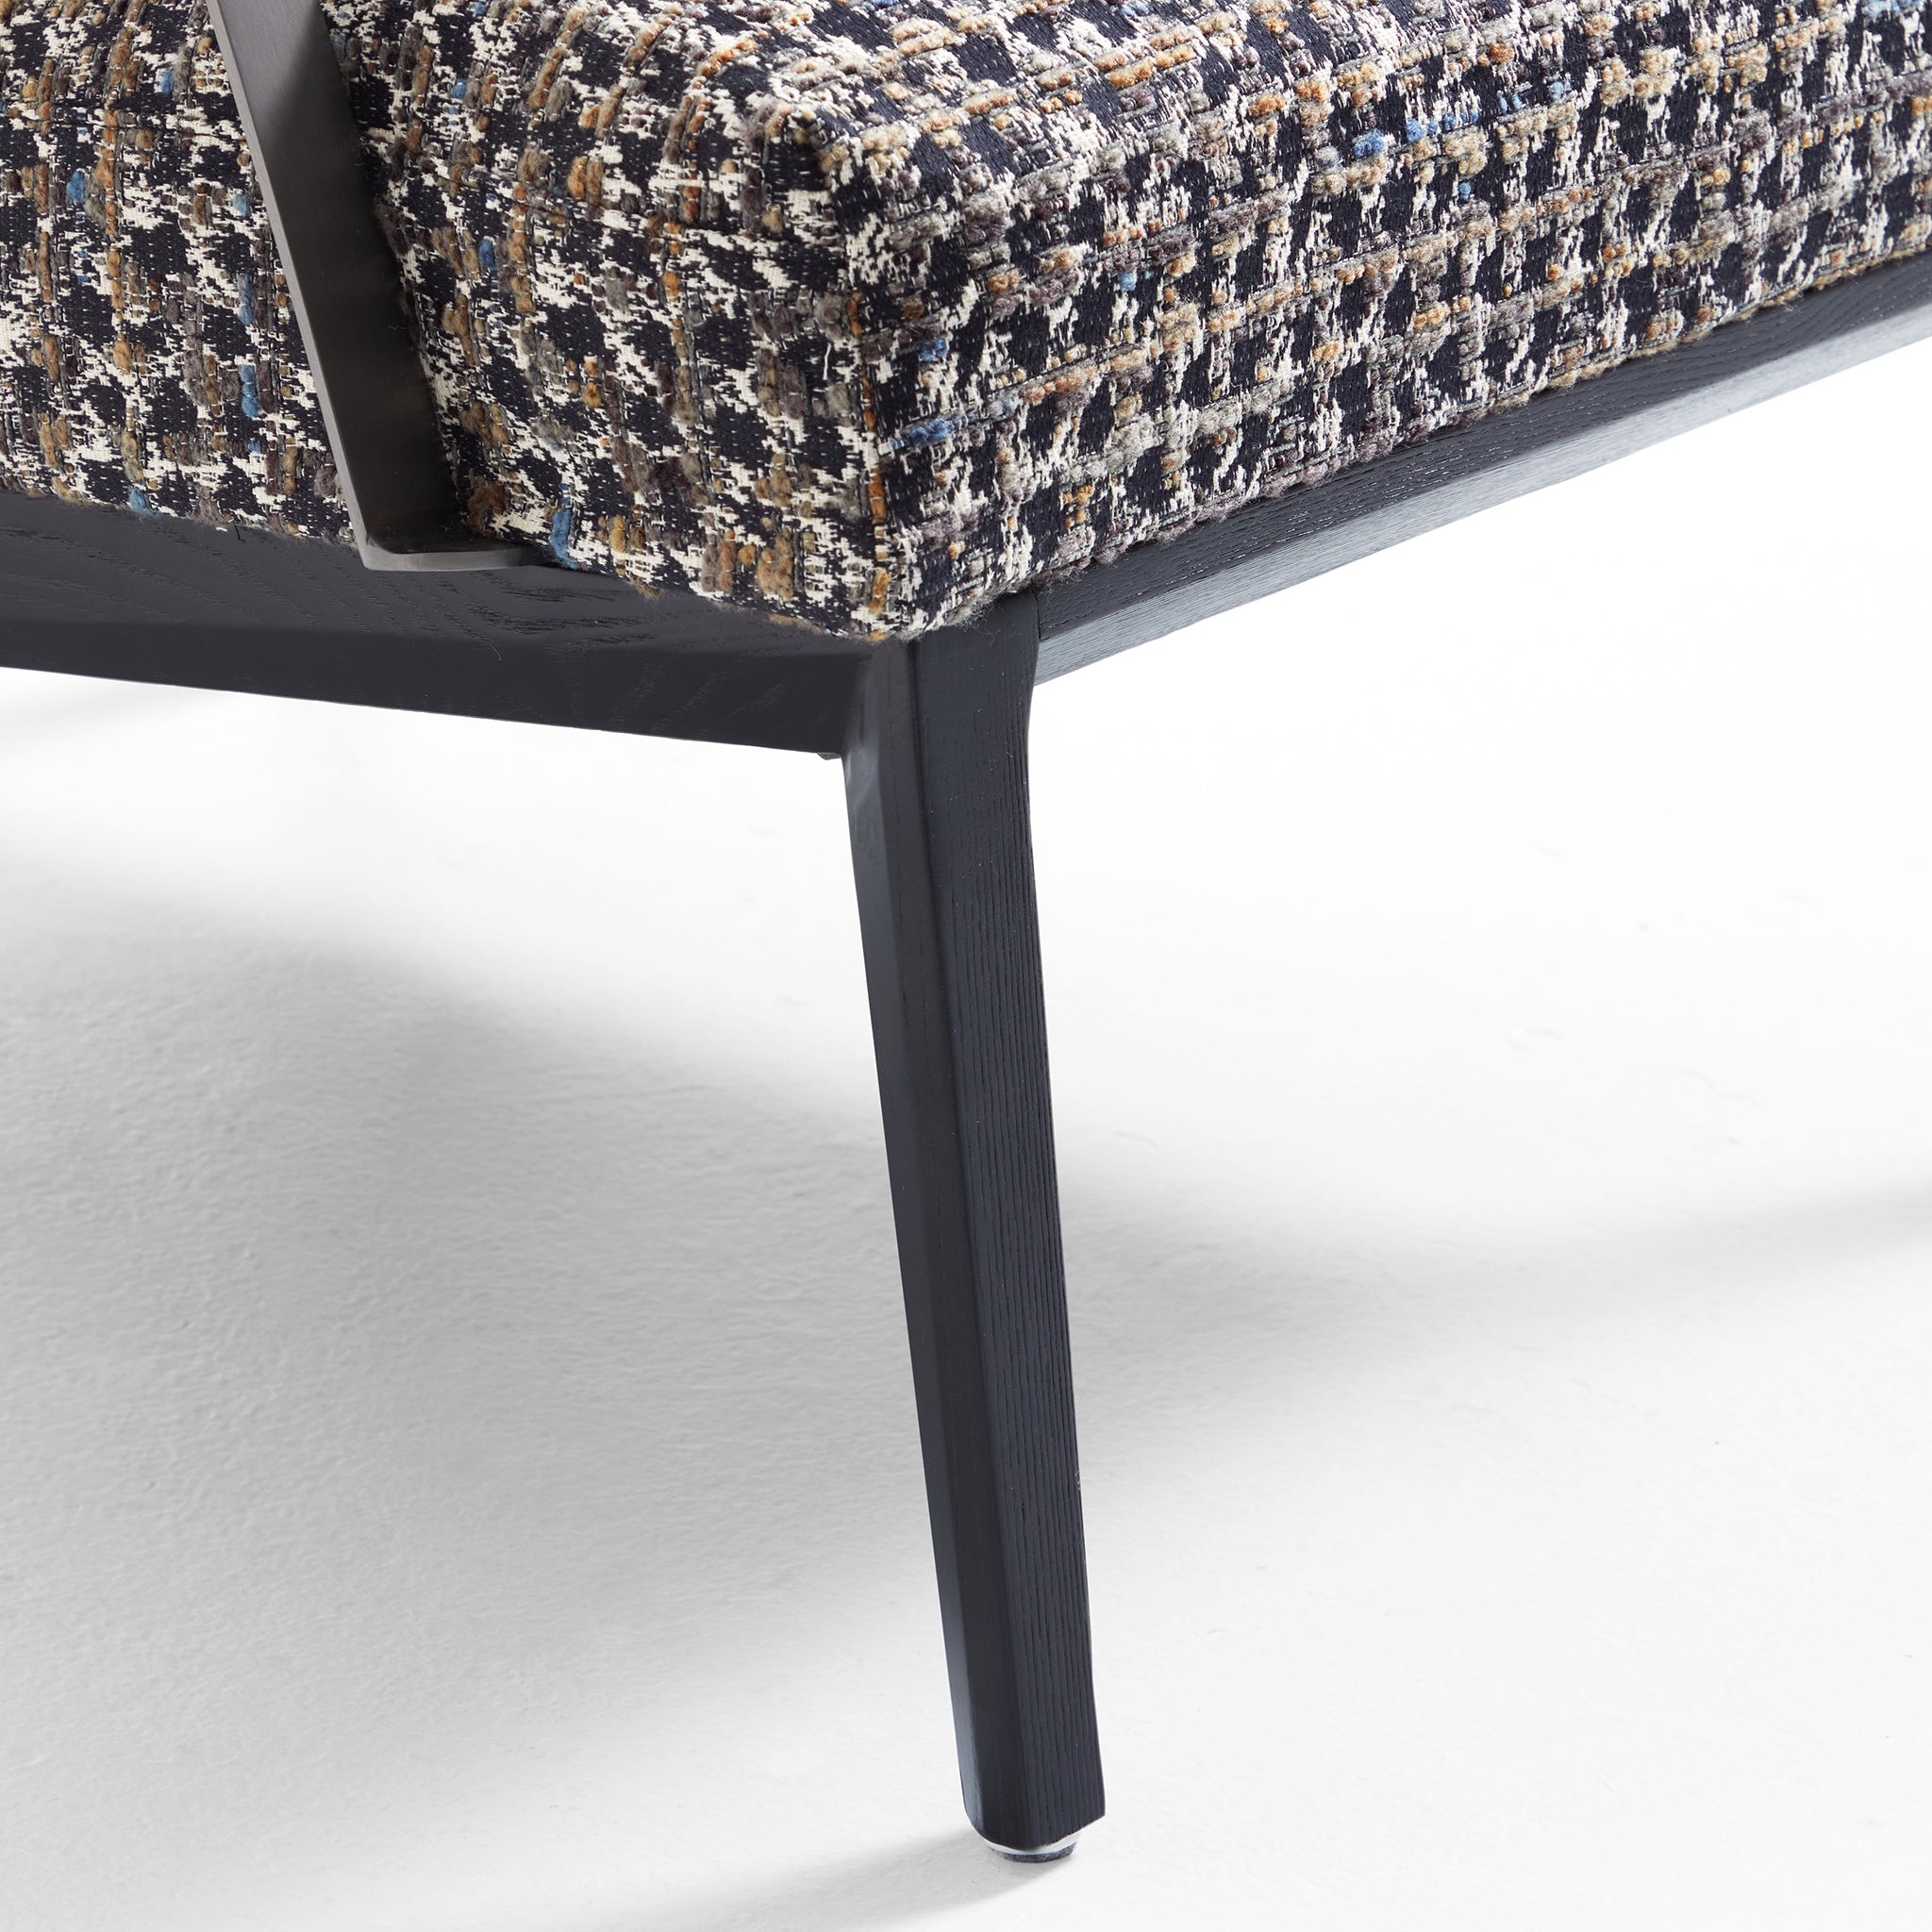 Charcoal Gary Flax Linen Minimalist Leisure Chair